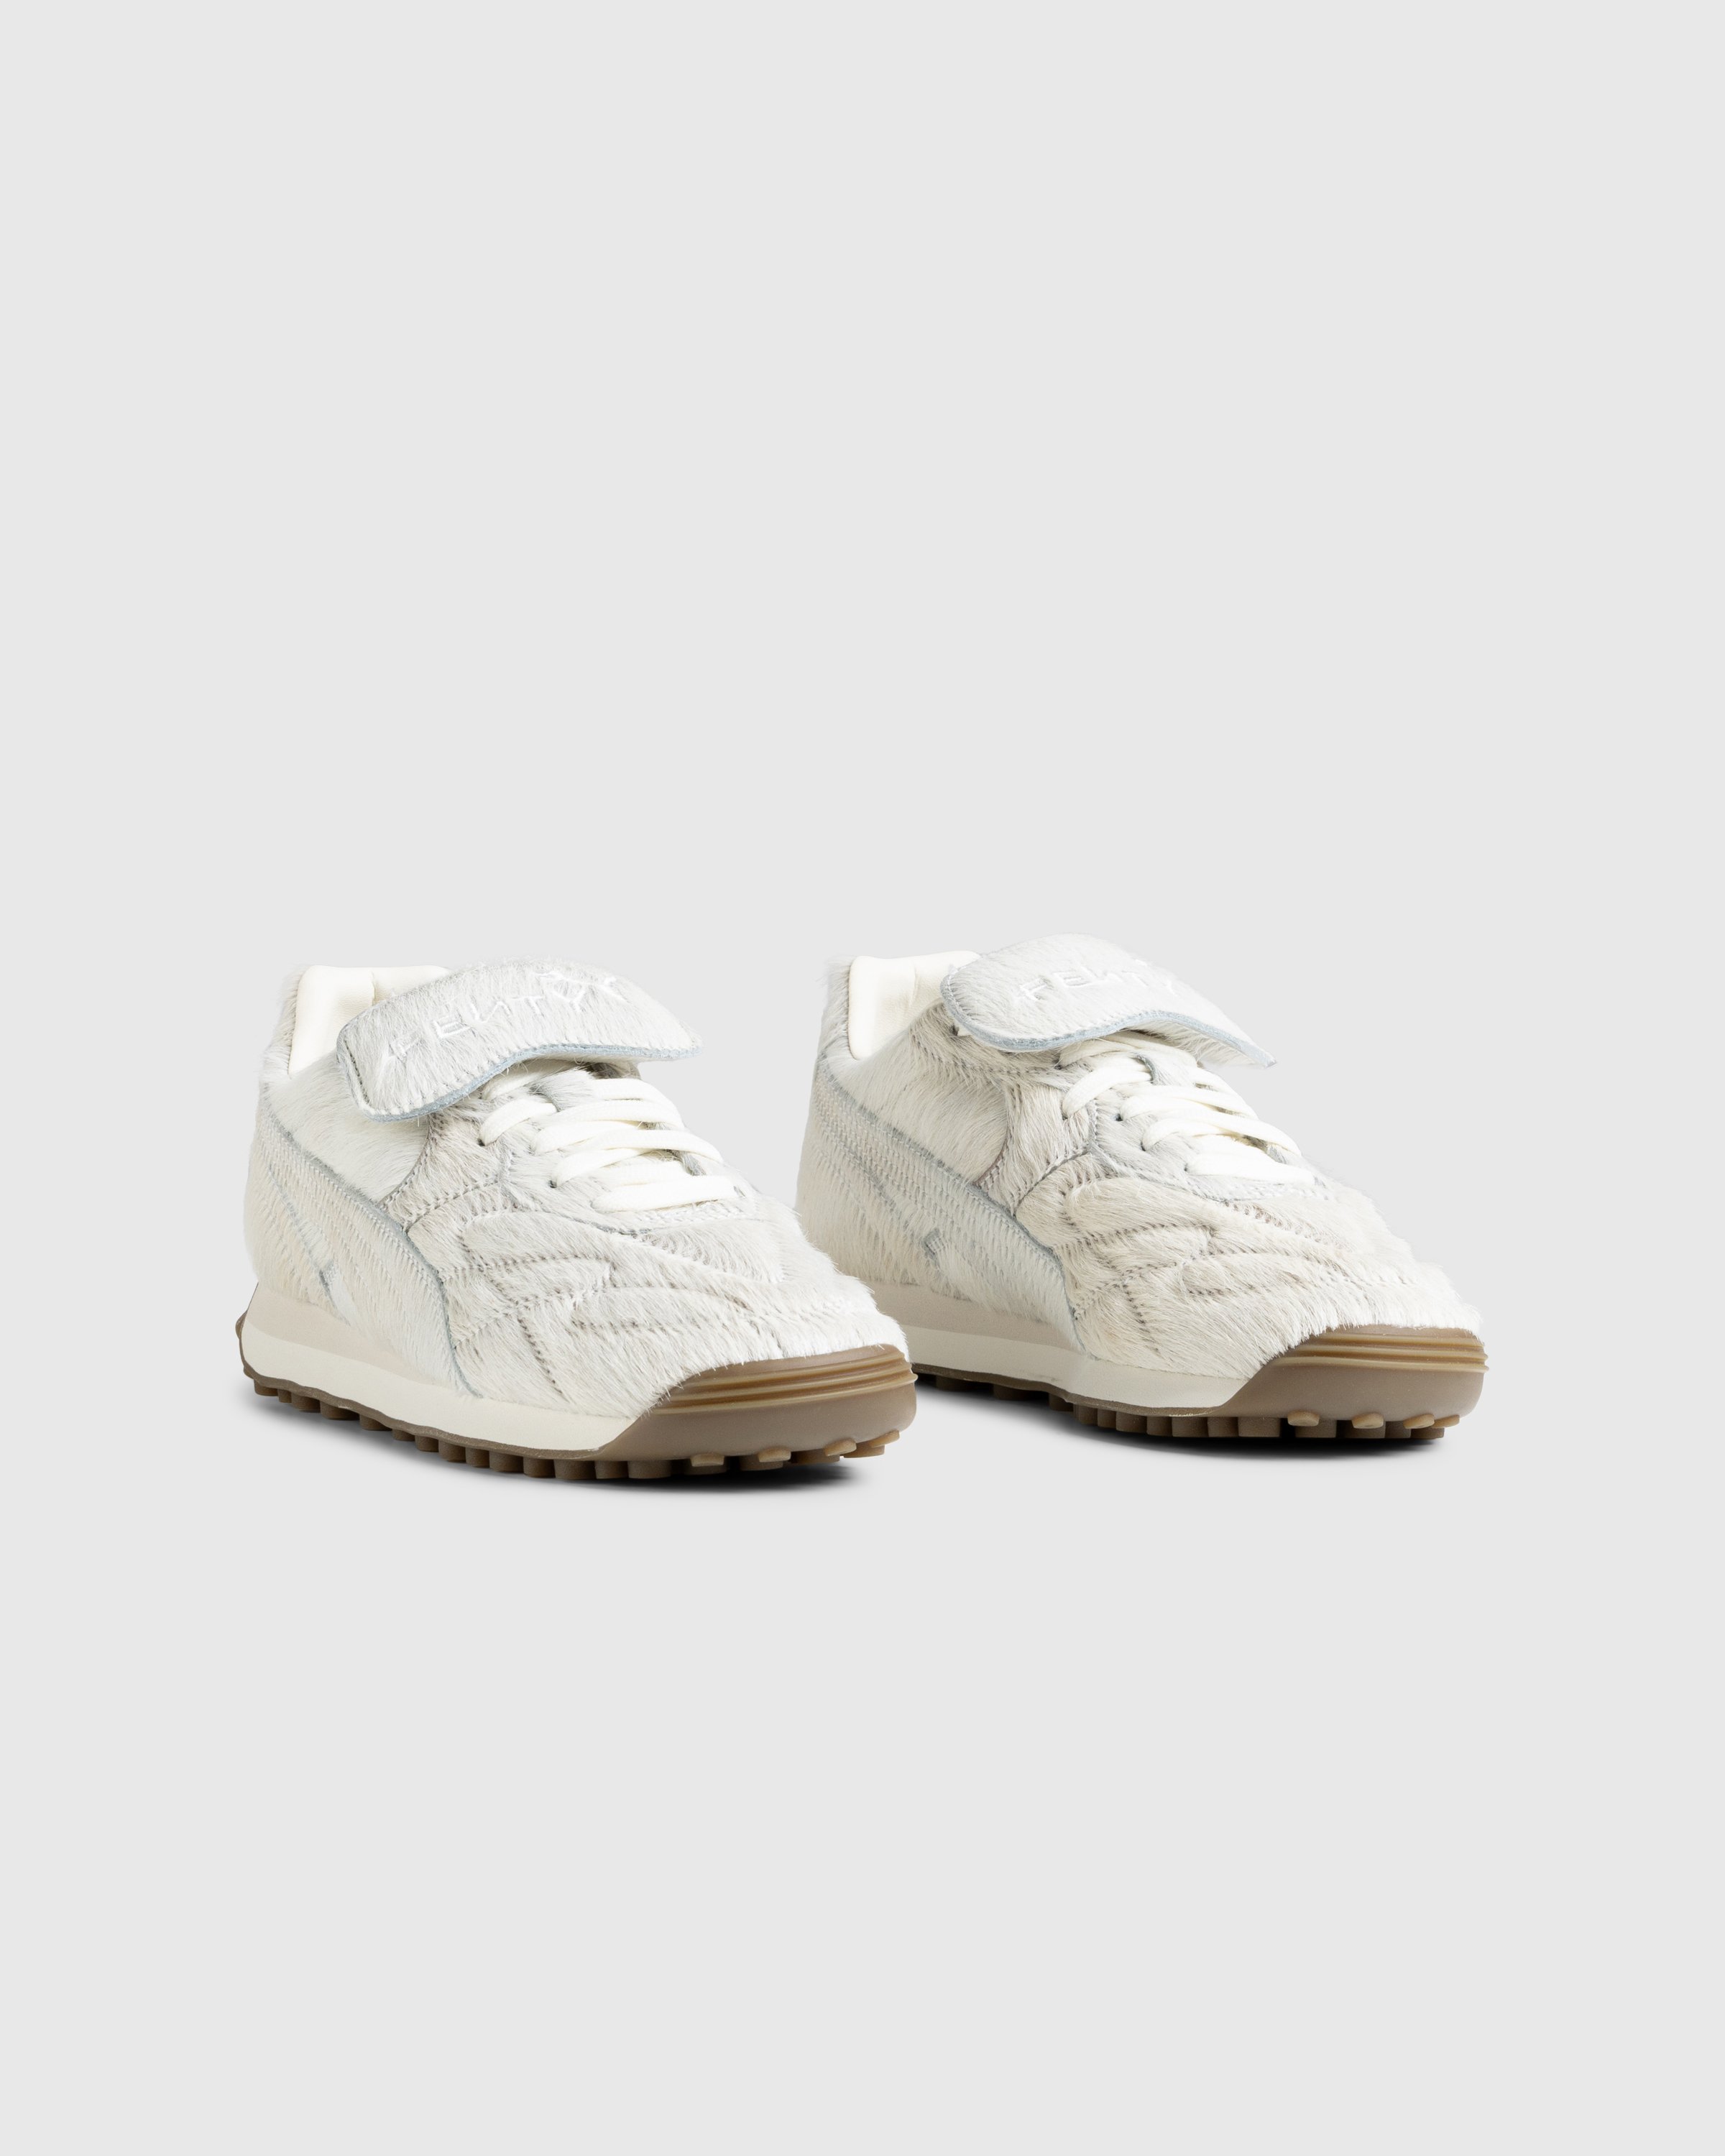 Fenty x Puma - AVANTI PONY HAIR FENTY Warm White - Footwear - White - Image 3